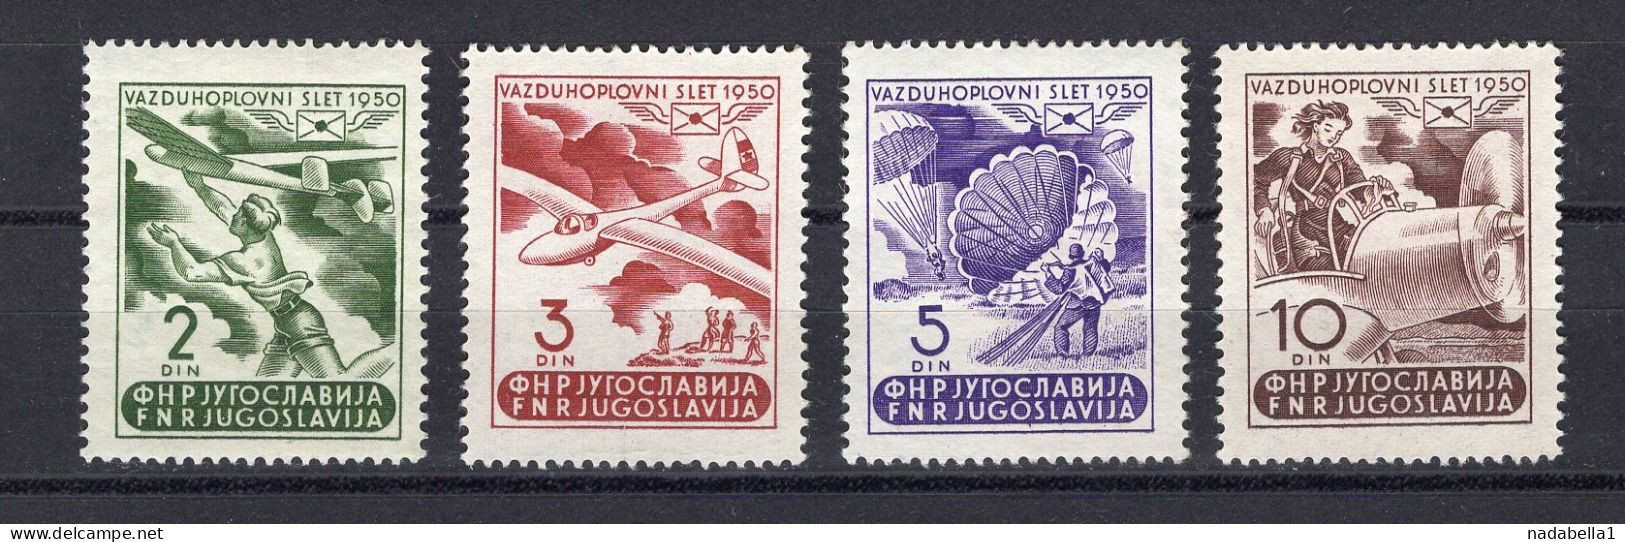 1950. YUGOSLAVIA,AVIATION MEETING,SET OF 4 STAMPS,MNH - Ongebruikt